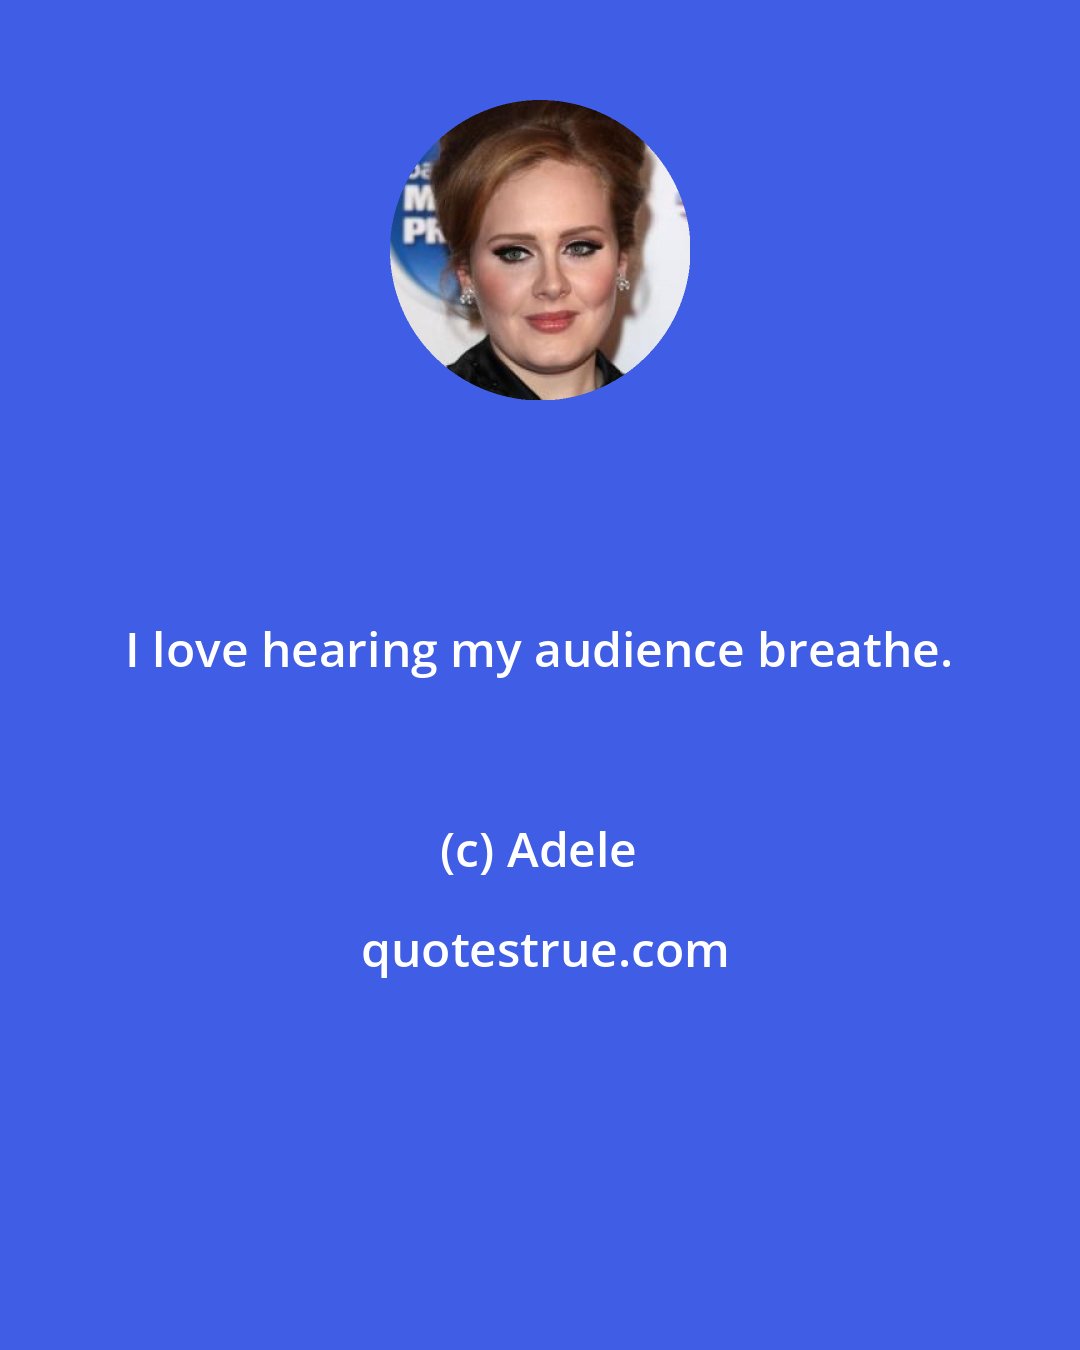 Adele: I love hearing my audience breathe.